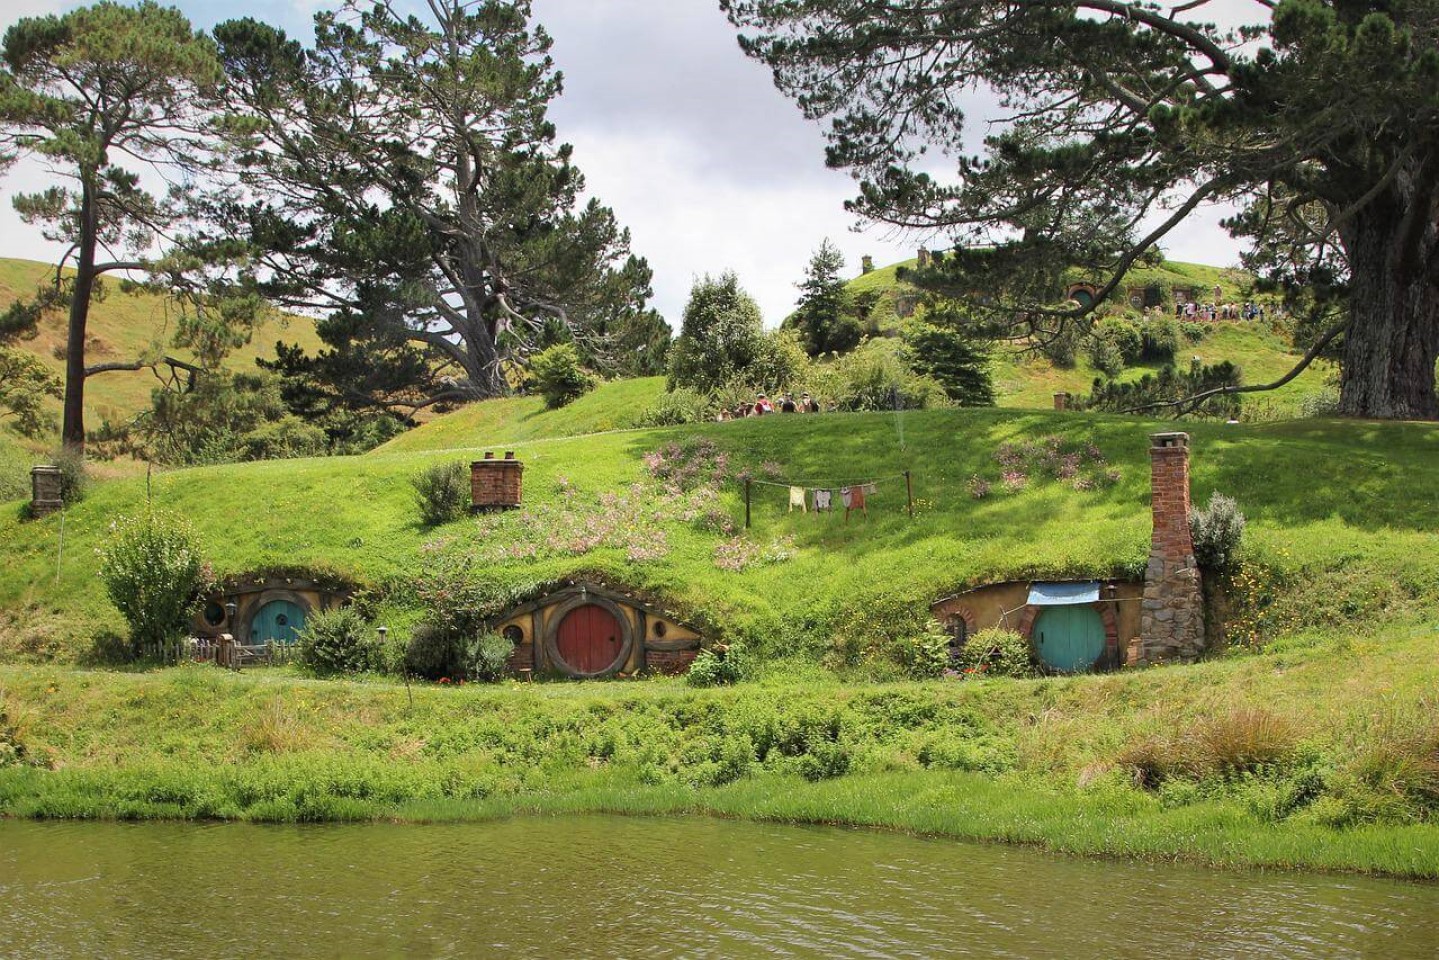 three hobbiton homes lined up on hill